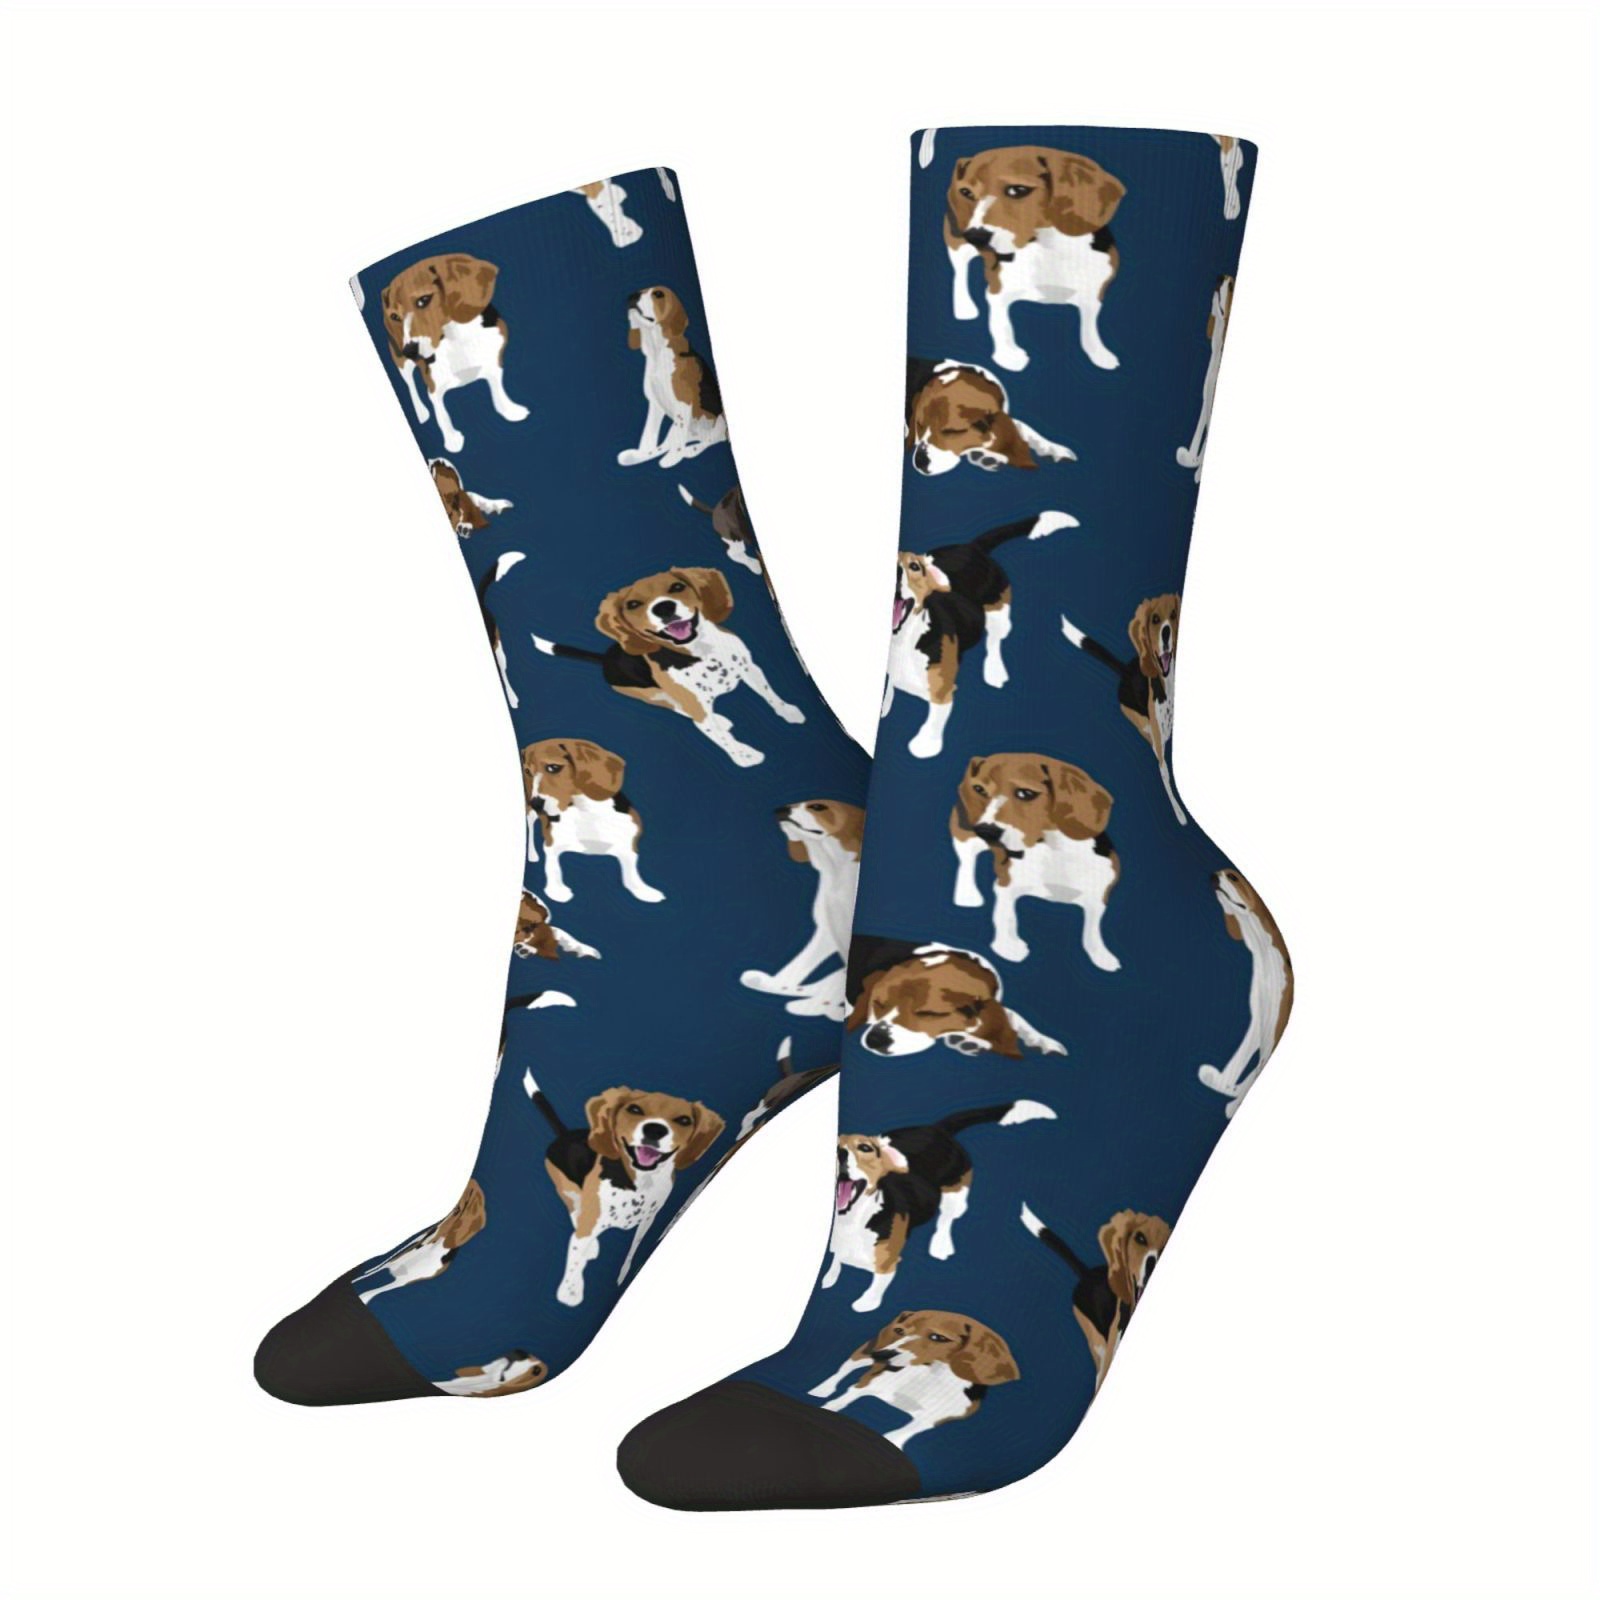 

1 Pair Of Unisex Harajuku Vintage Style Novelty Beagle Dog Pattern Crew Socks, Trendy 3d Digital Printed Men Women Socks, Crazy Funny Socks For Gifts